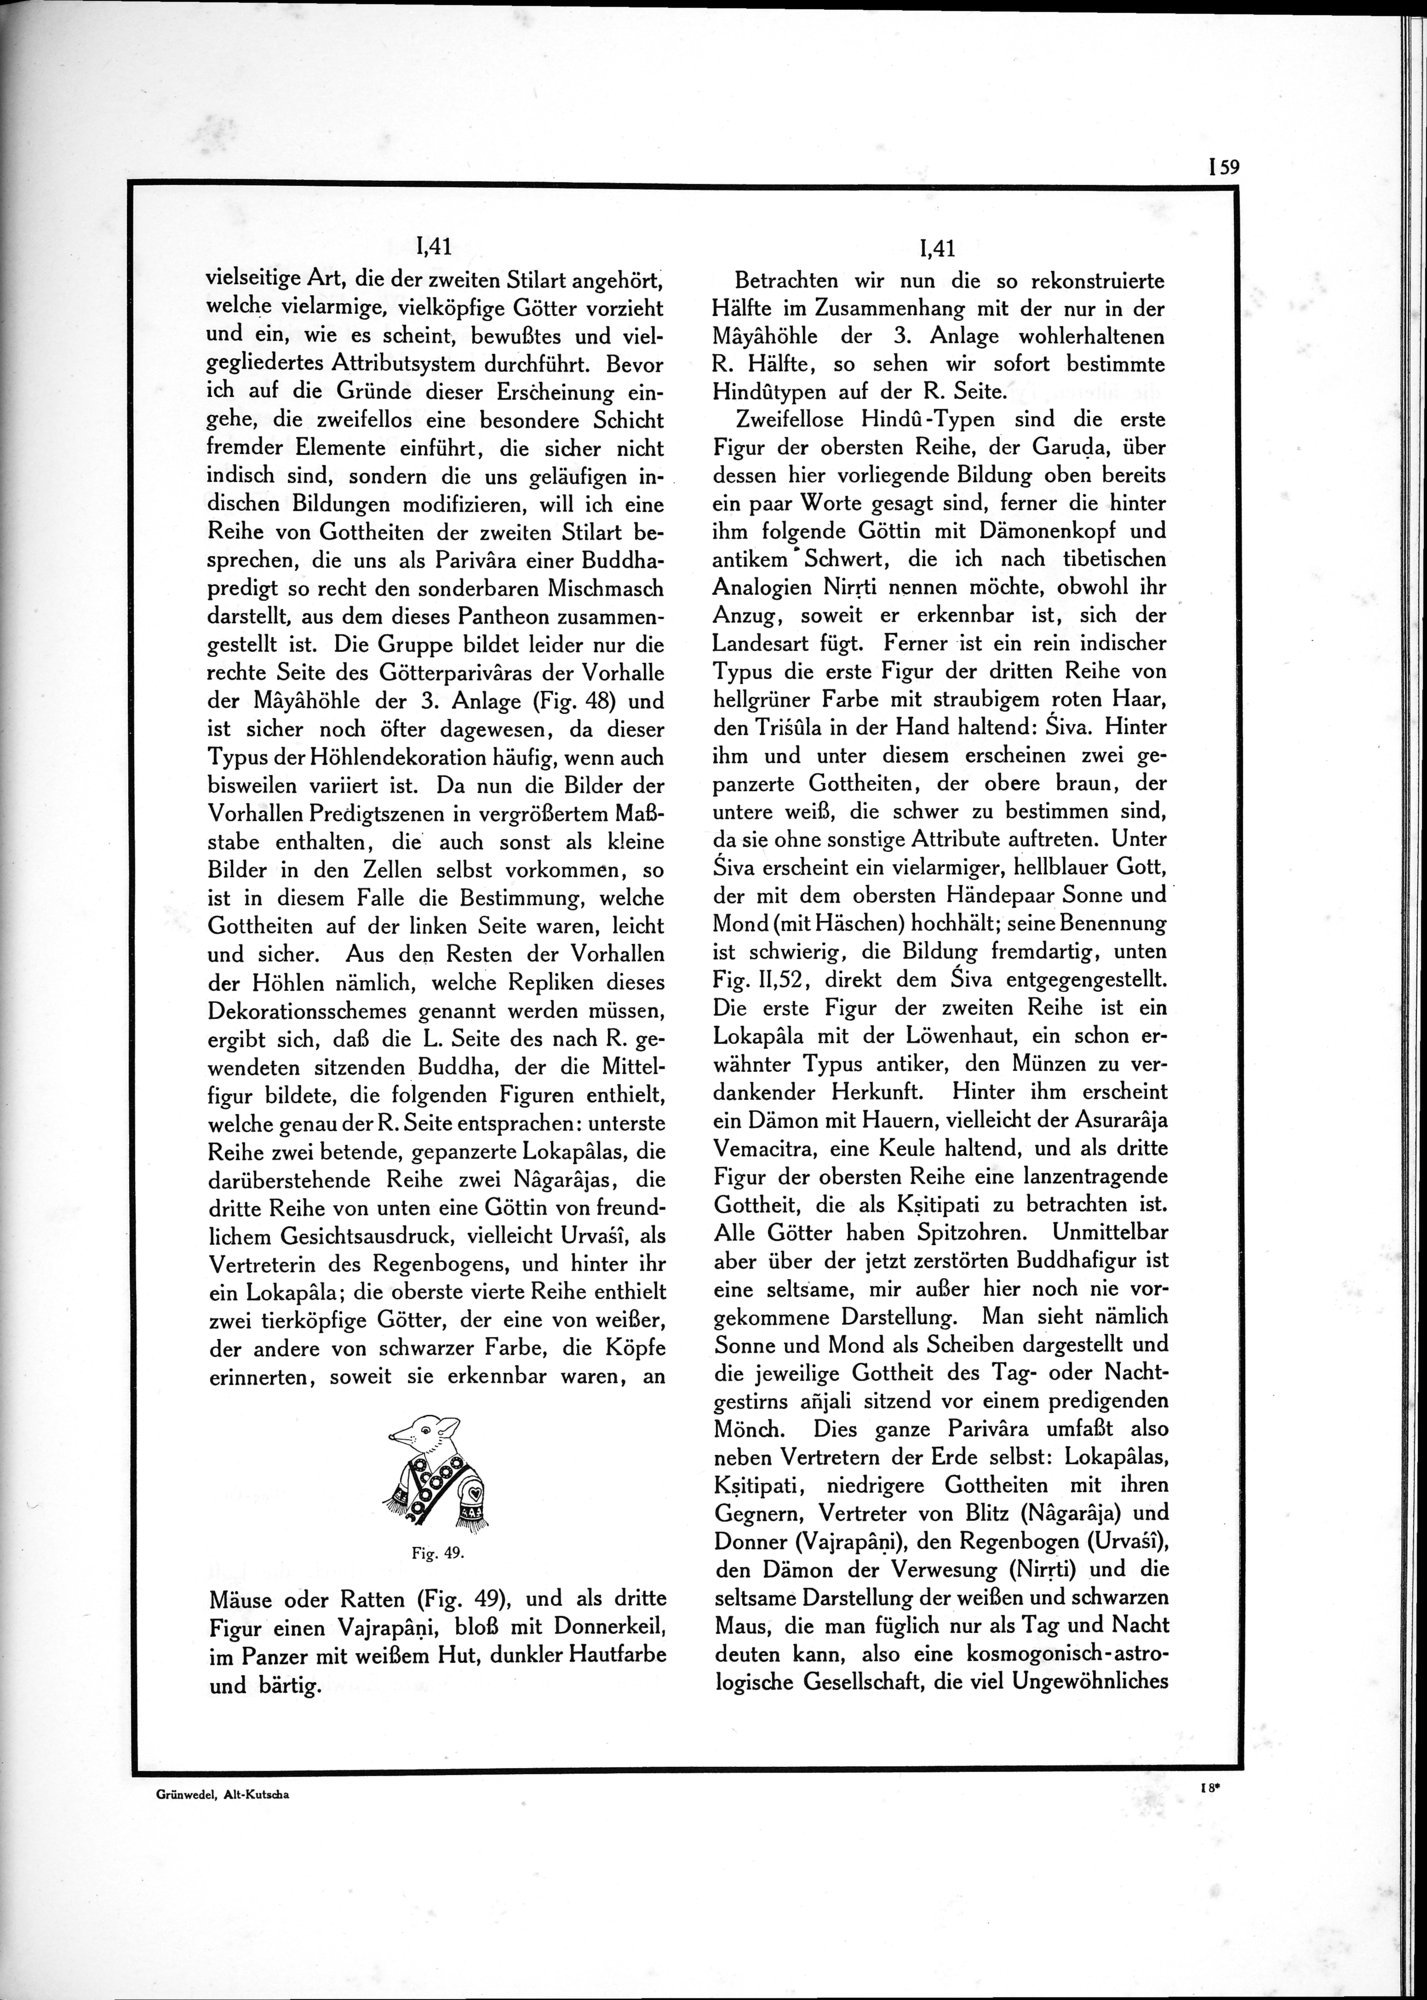 Alt-Kutscha : vol.1 / Page 71 (Grayscale High Resolution Image)